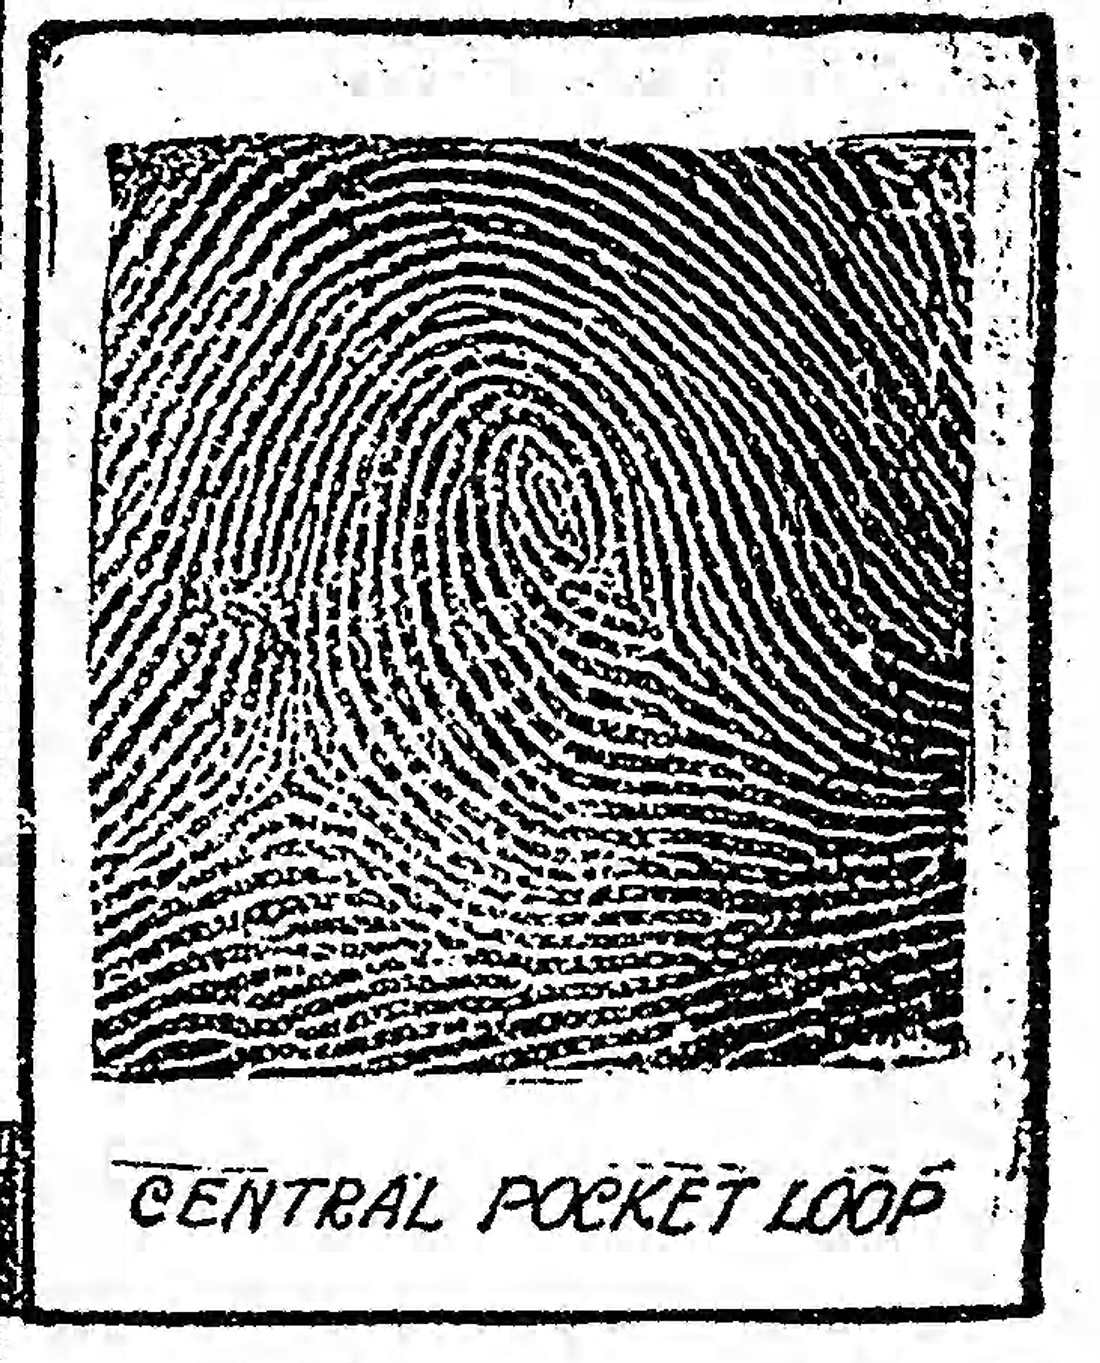 The Baltimore Sun Sun Jan 28 1912 Central Pocket loop